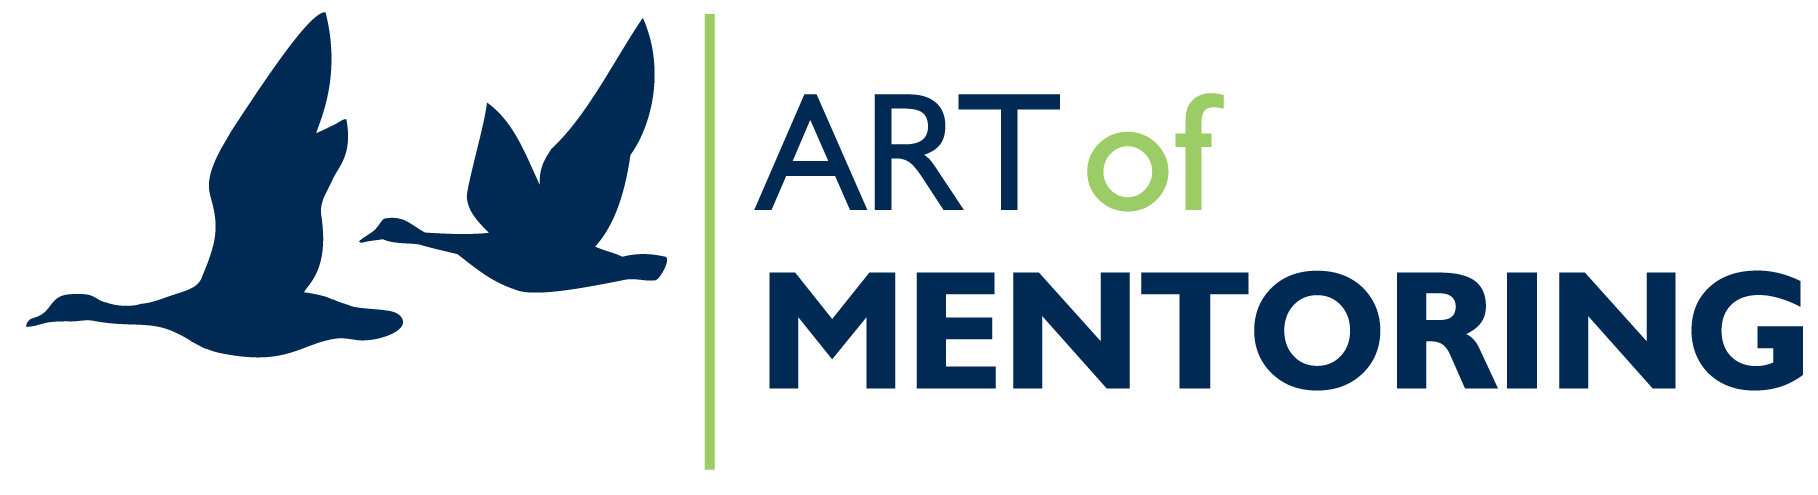 Art of Mentoring Logo